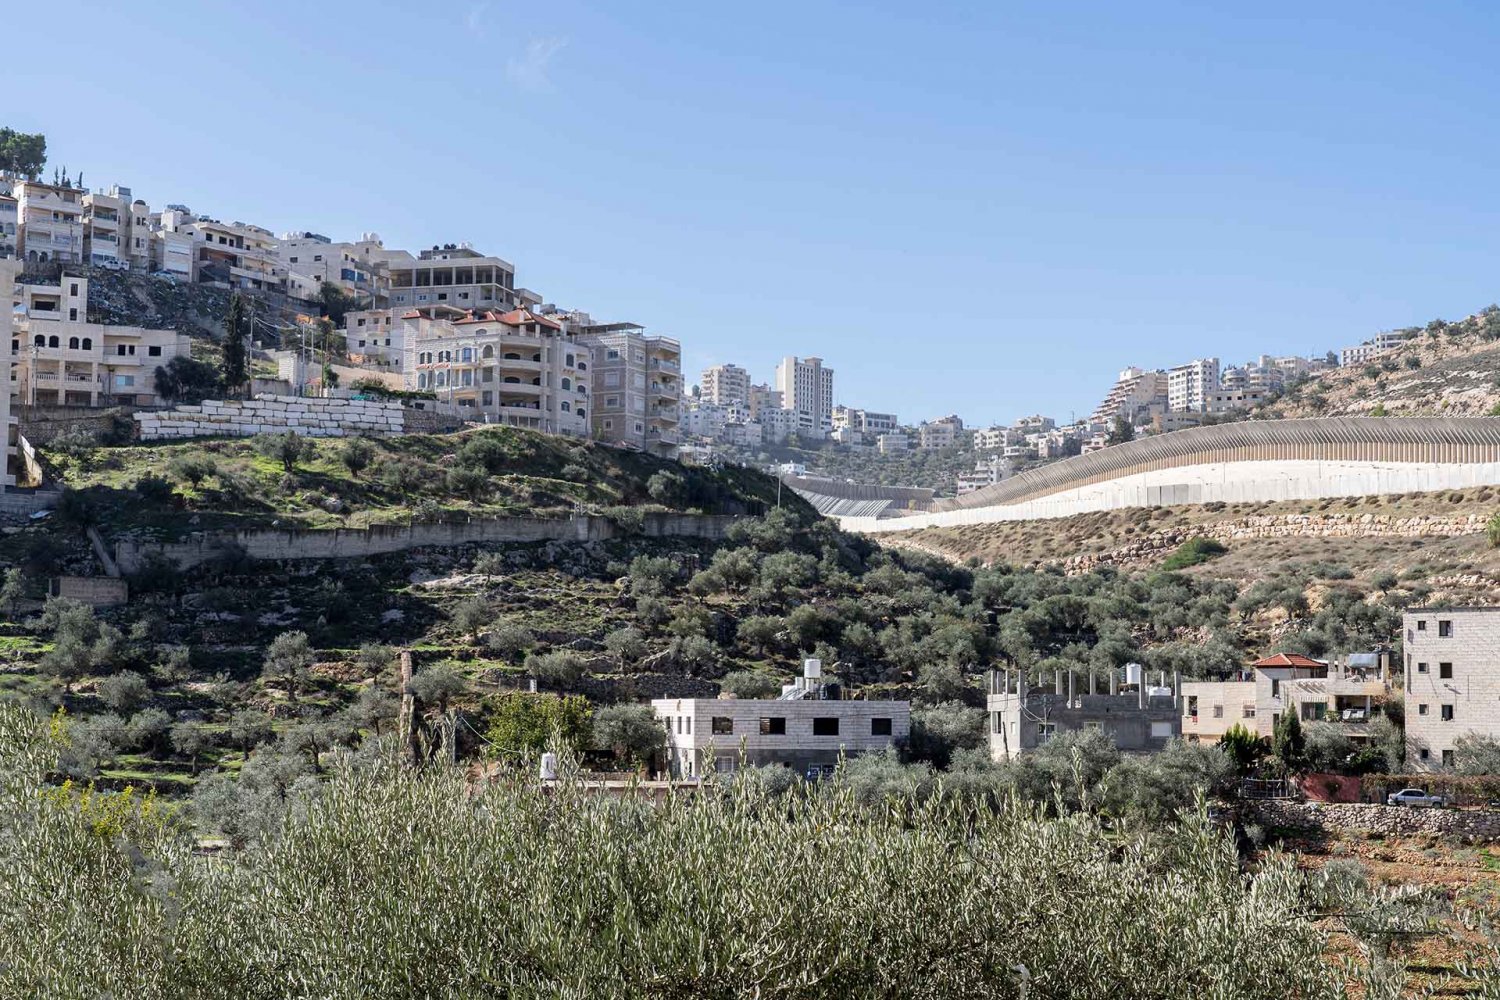 Bir 'Awna, a neighborhood enclaved by the Separation Wall